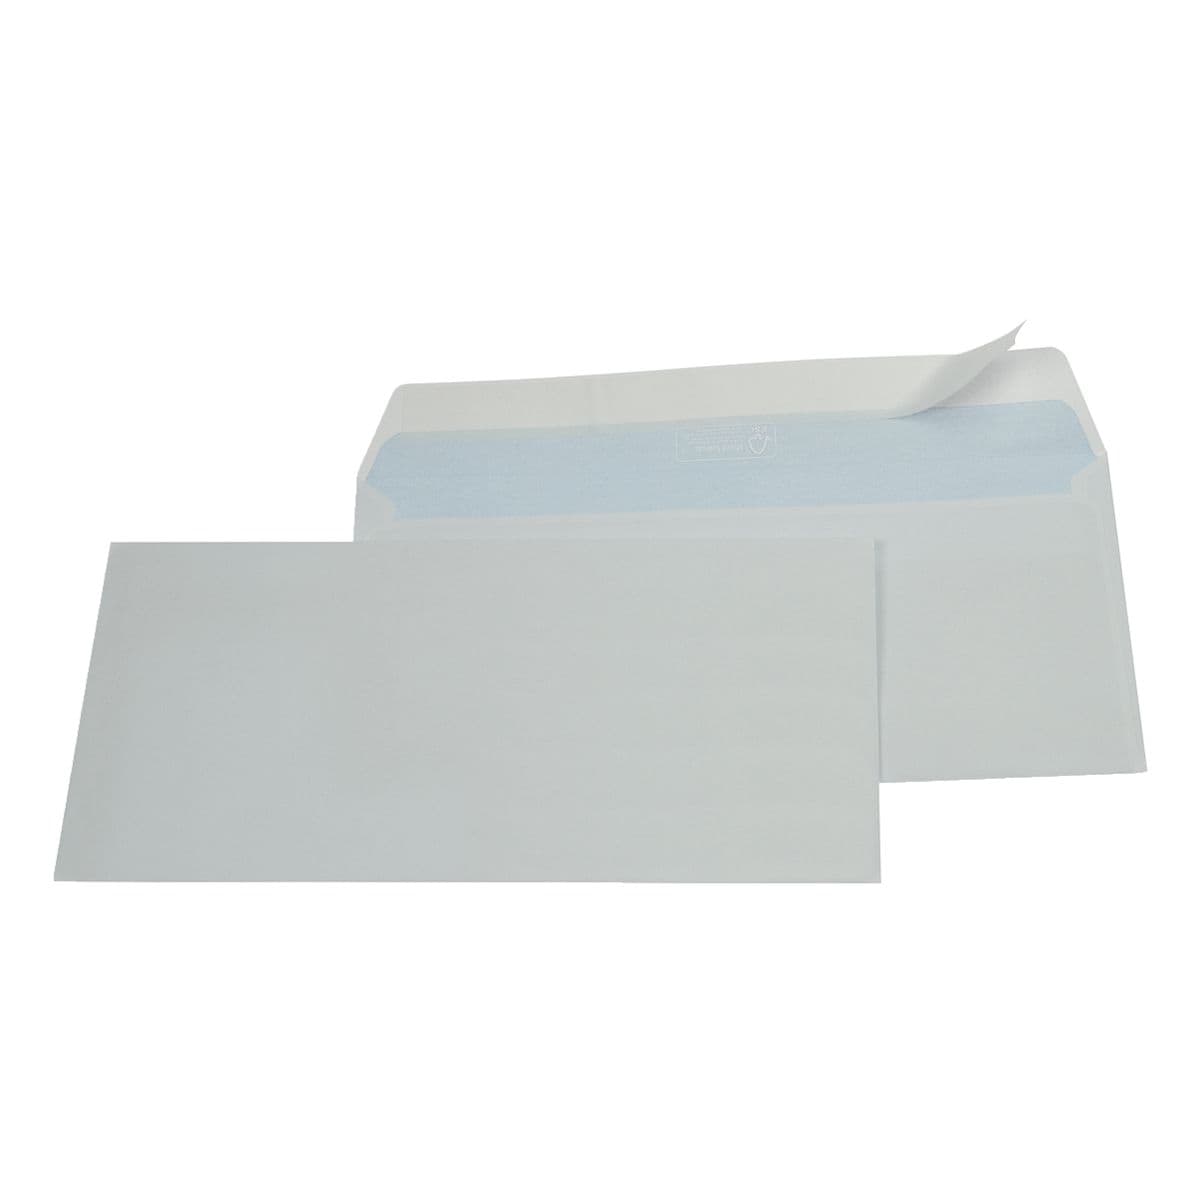 Enveloppen GALLERY enveloppen 114 x 229 mm, DL 80 g/m zonder venster, zelfklevend met beschermstrip - 500 stuk(s)